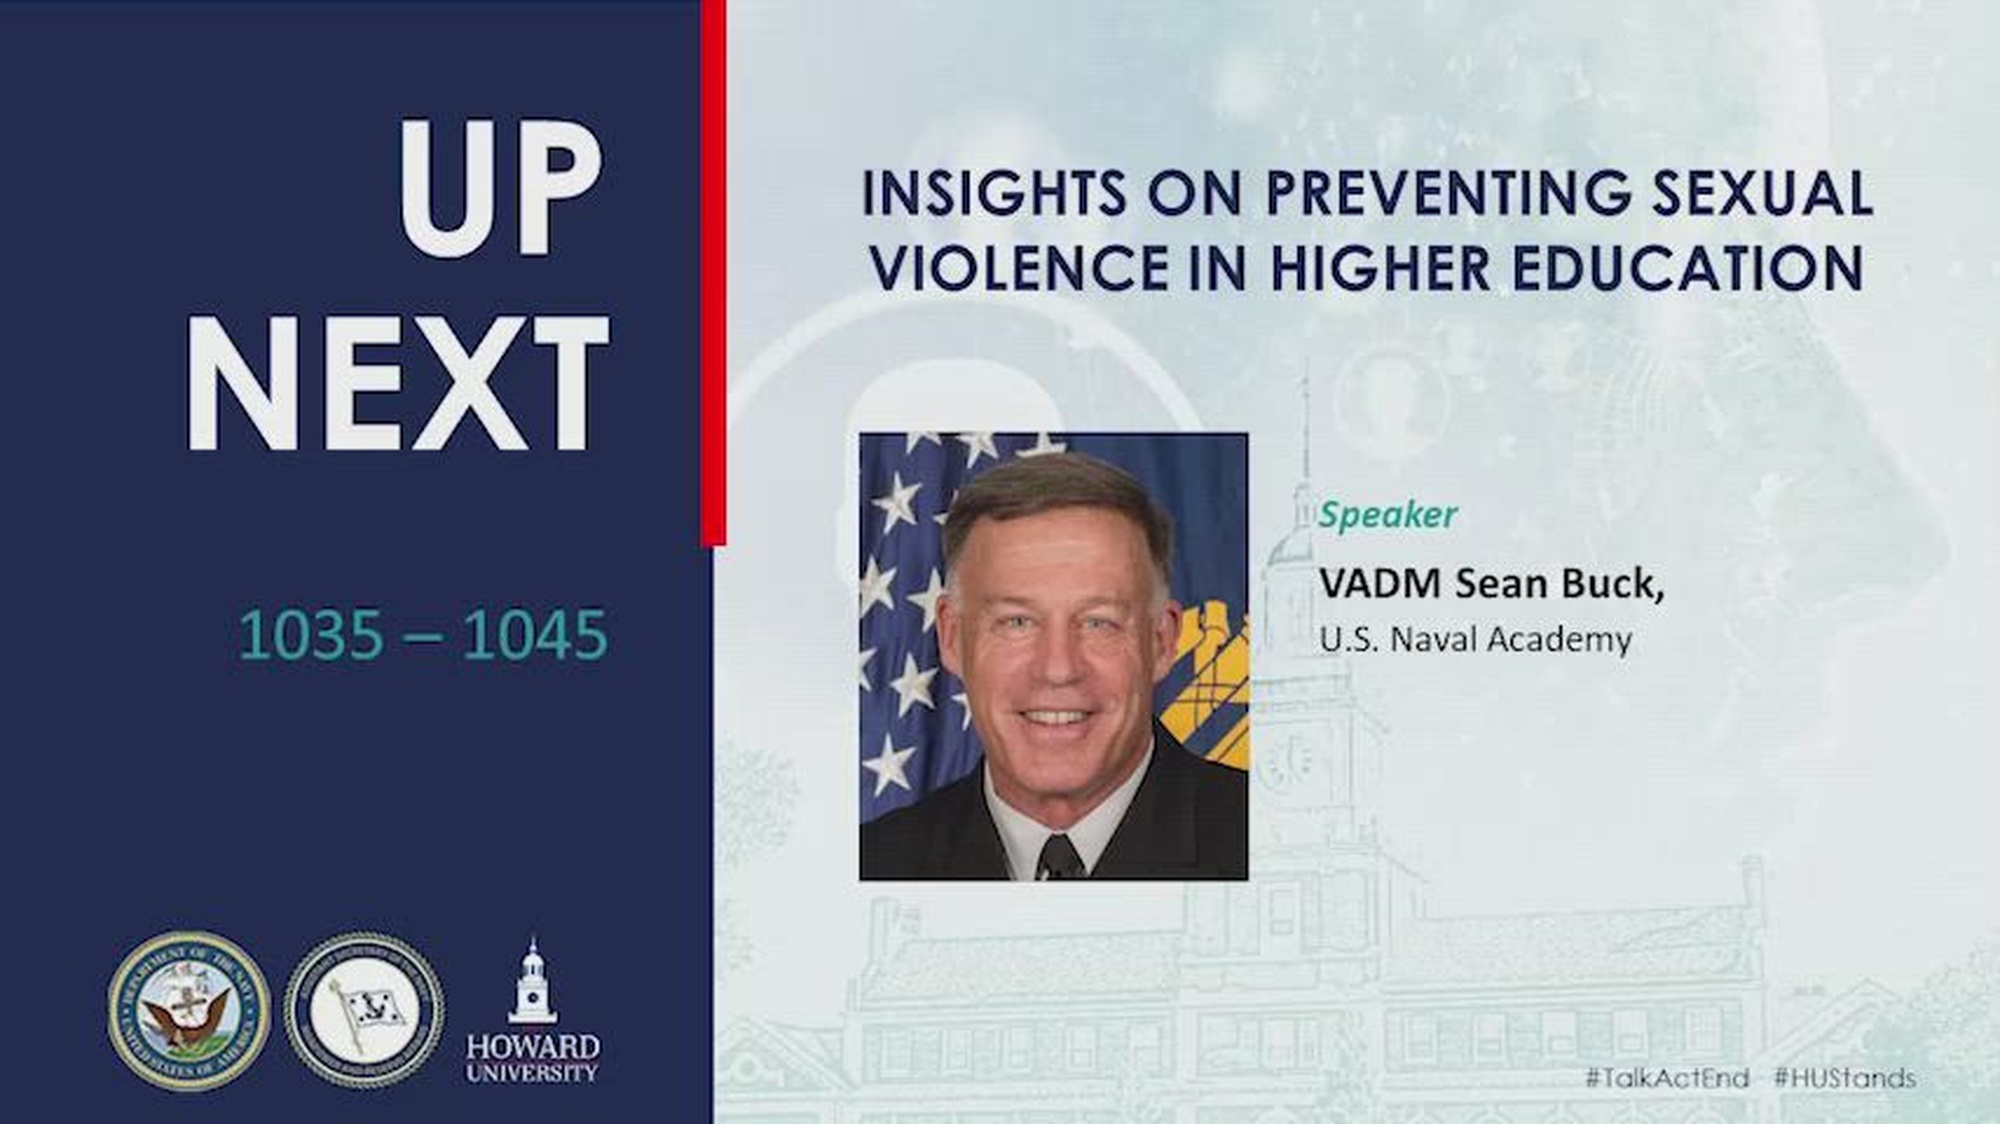 Insights on Preventing Sexual Violence in Higher Education

Speaker: VADM, Sean Buck, U.S. Naval Academy 